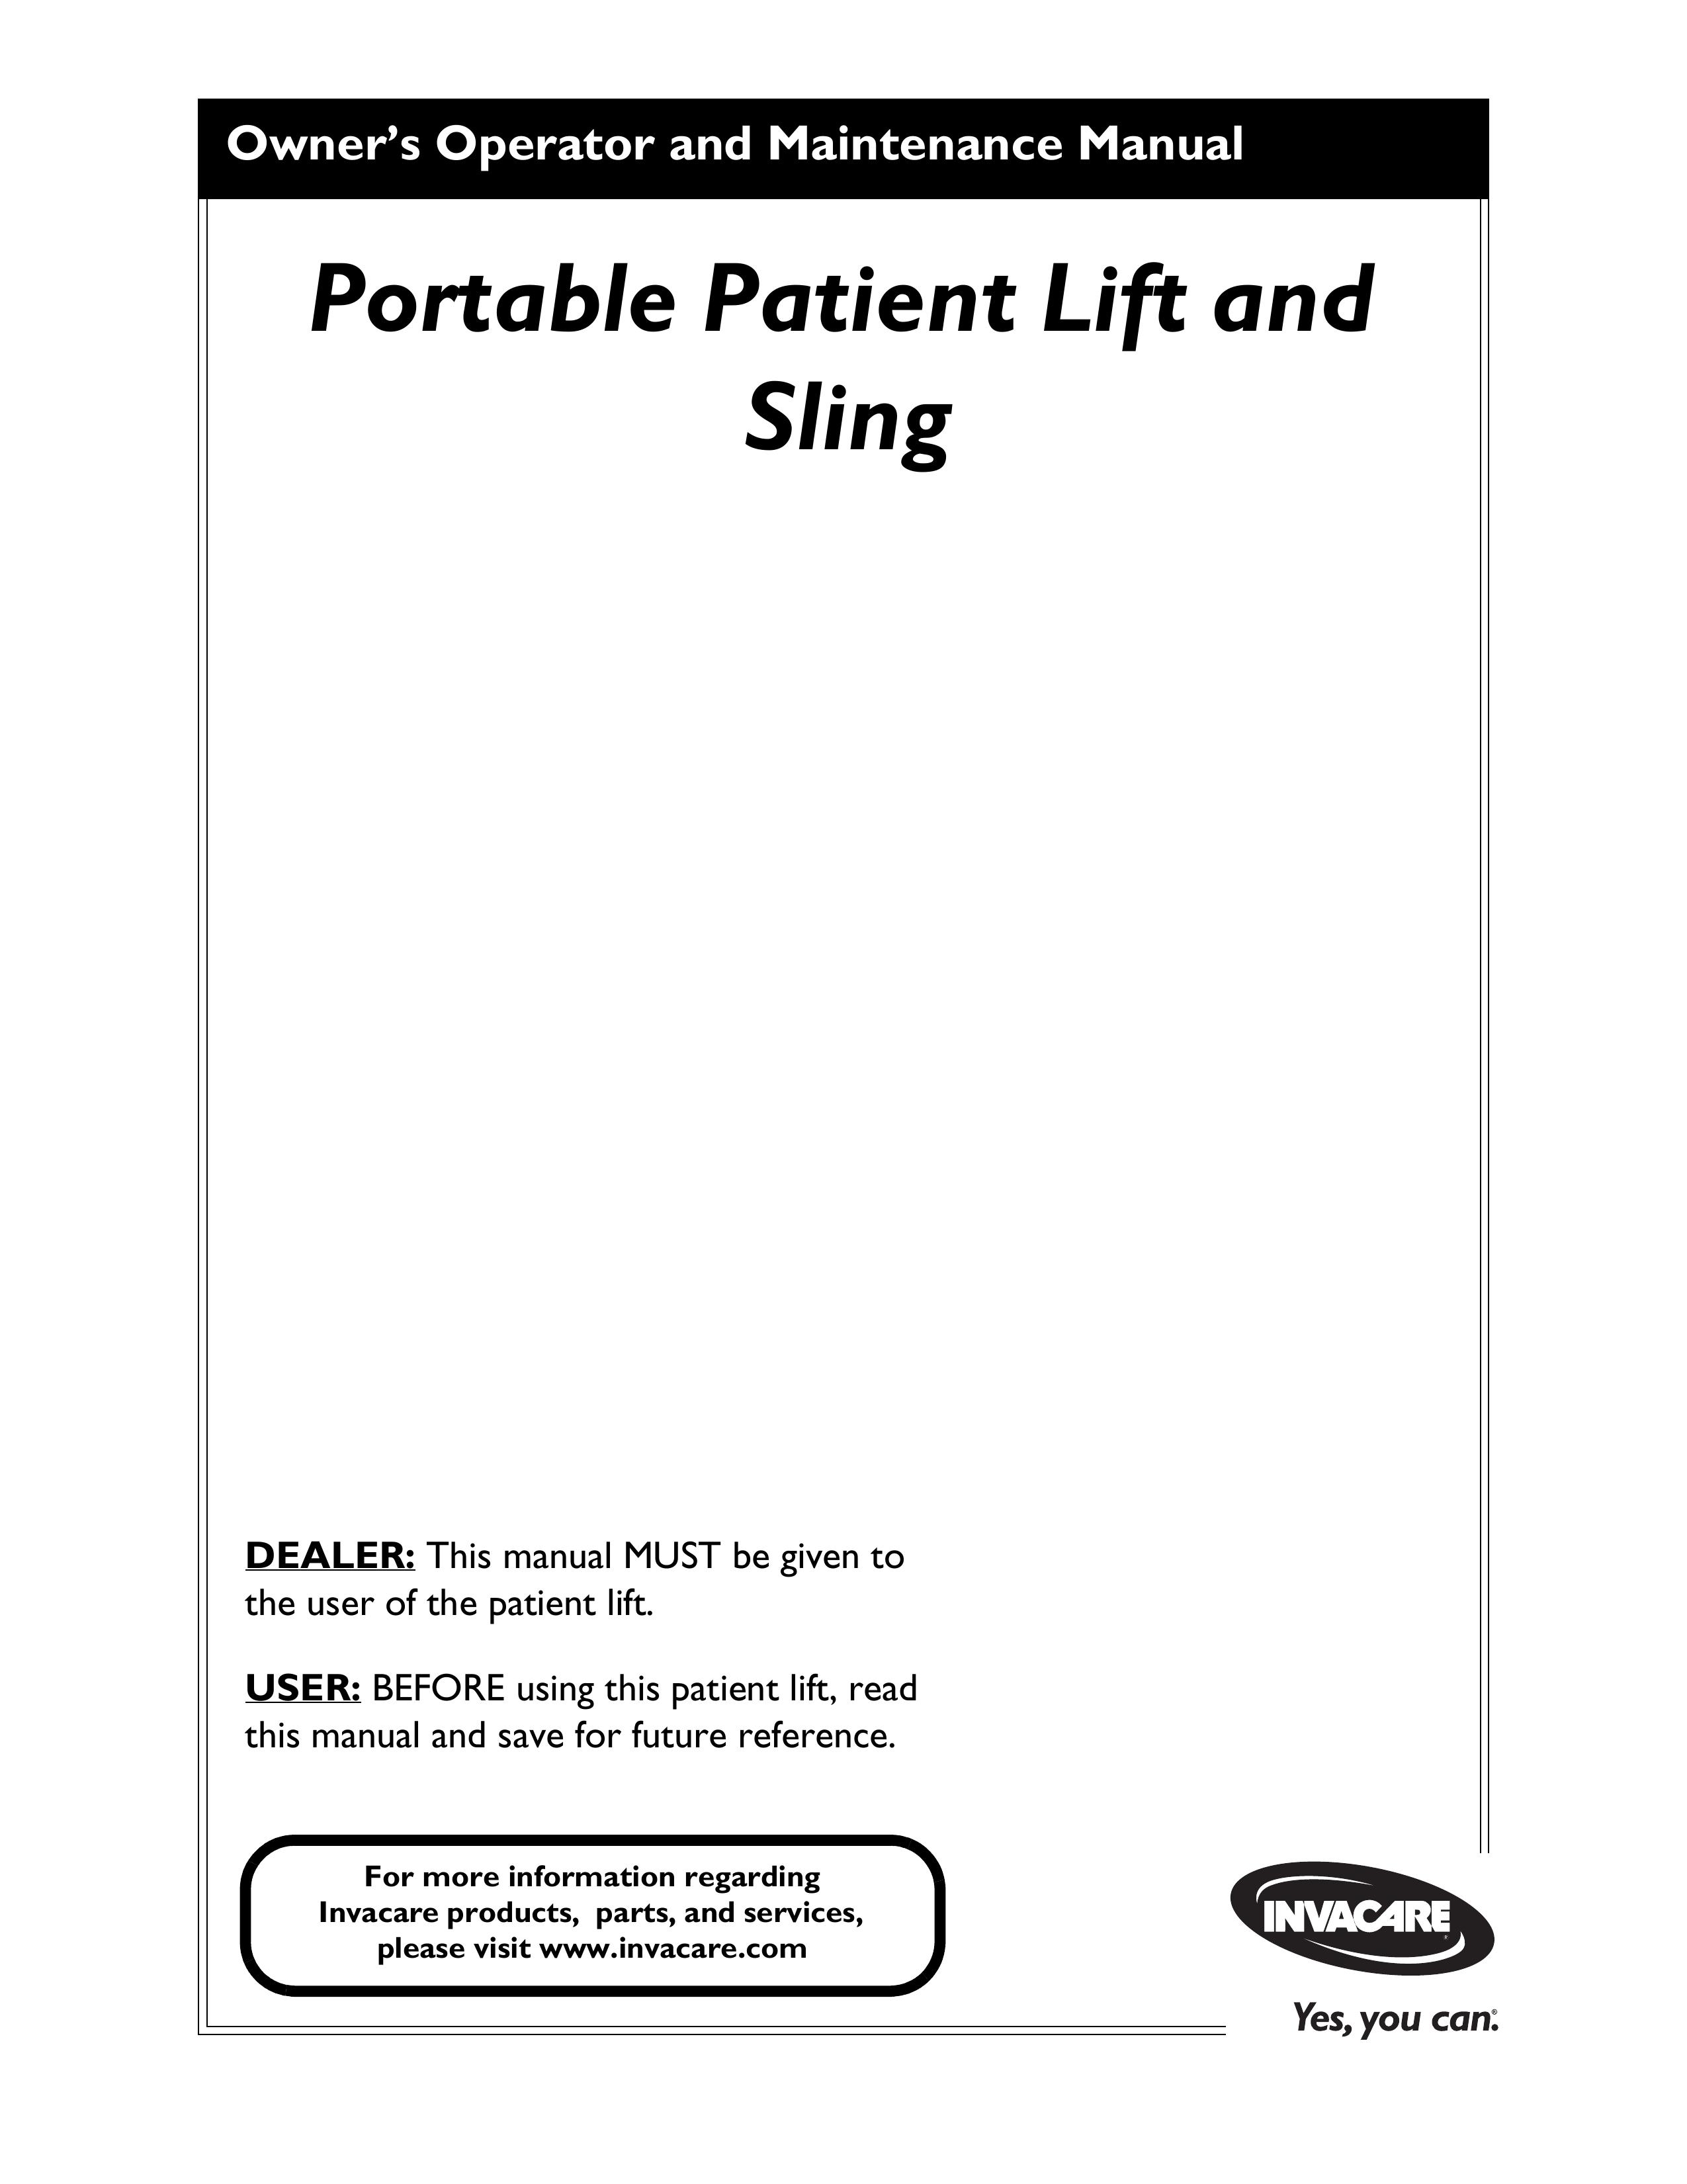 Invacare 9805P Personal Lift User Manual